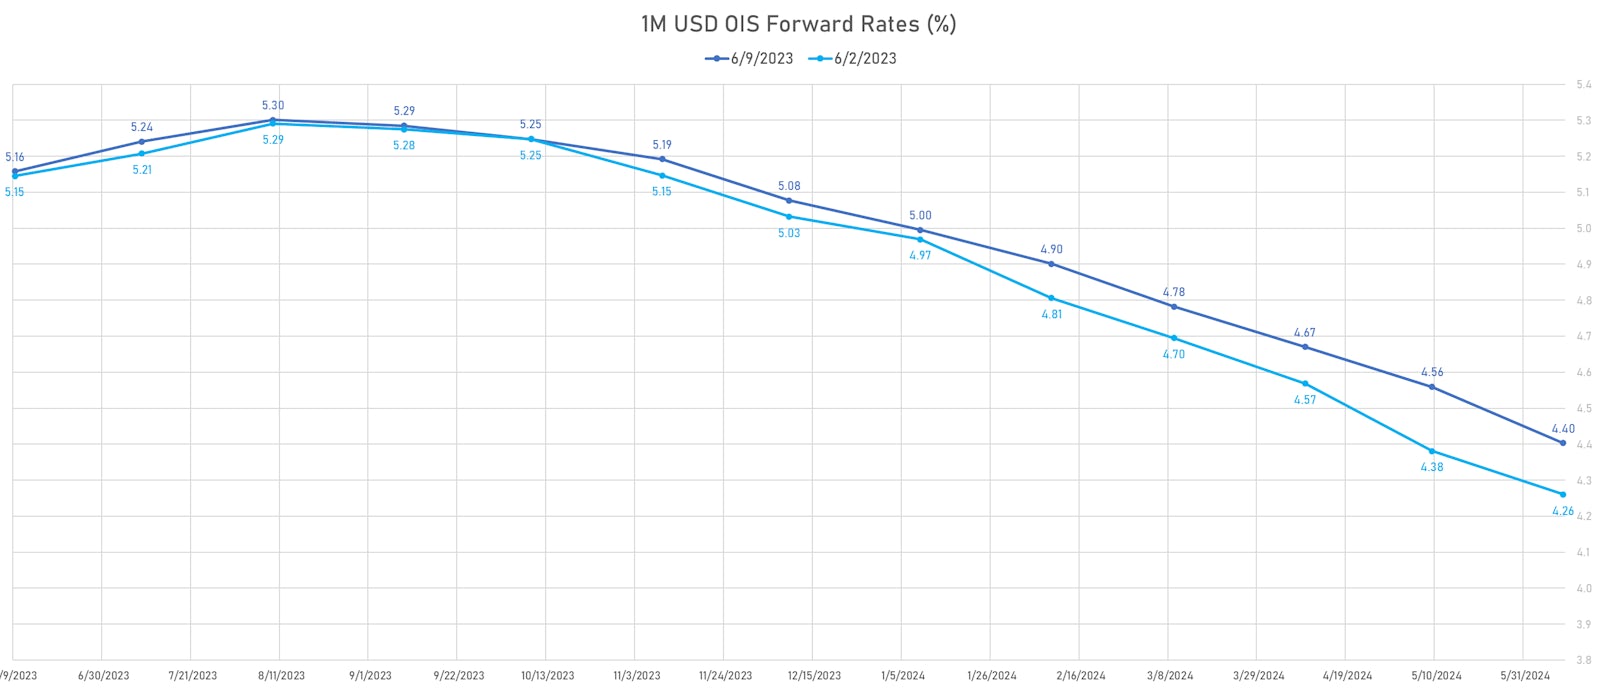 1M USD OIS Forward Rates | Sources: phipost.com, Refinitiv data